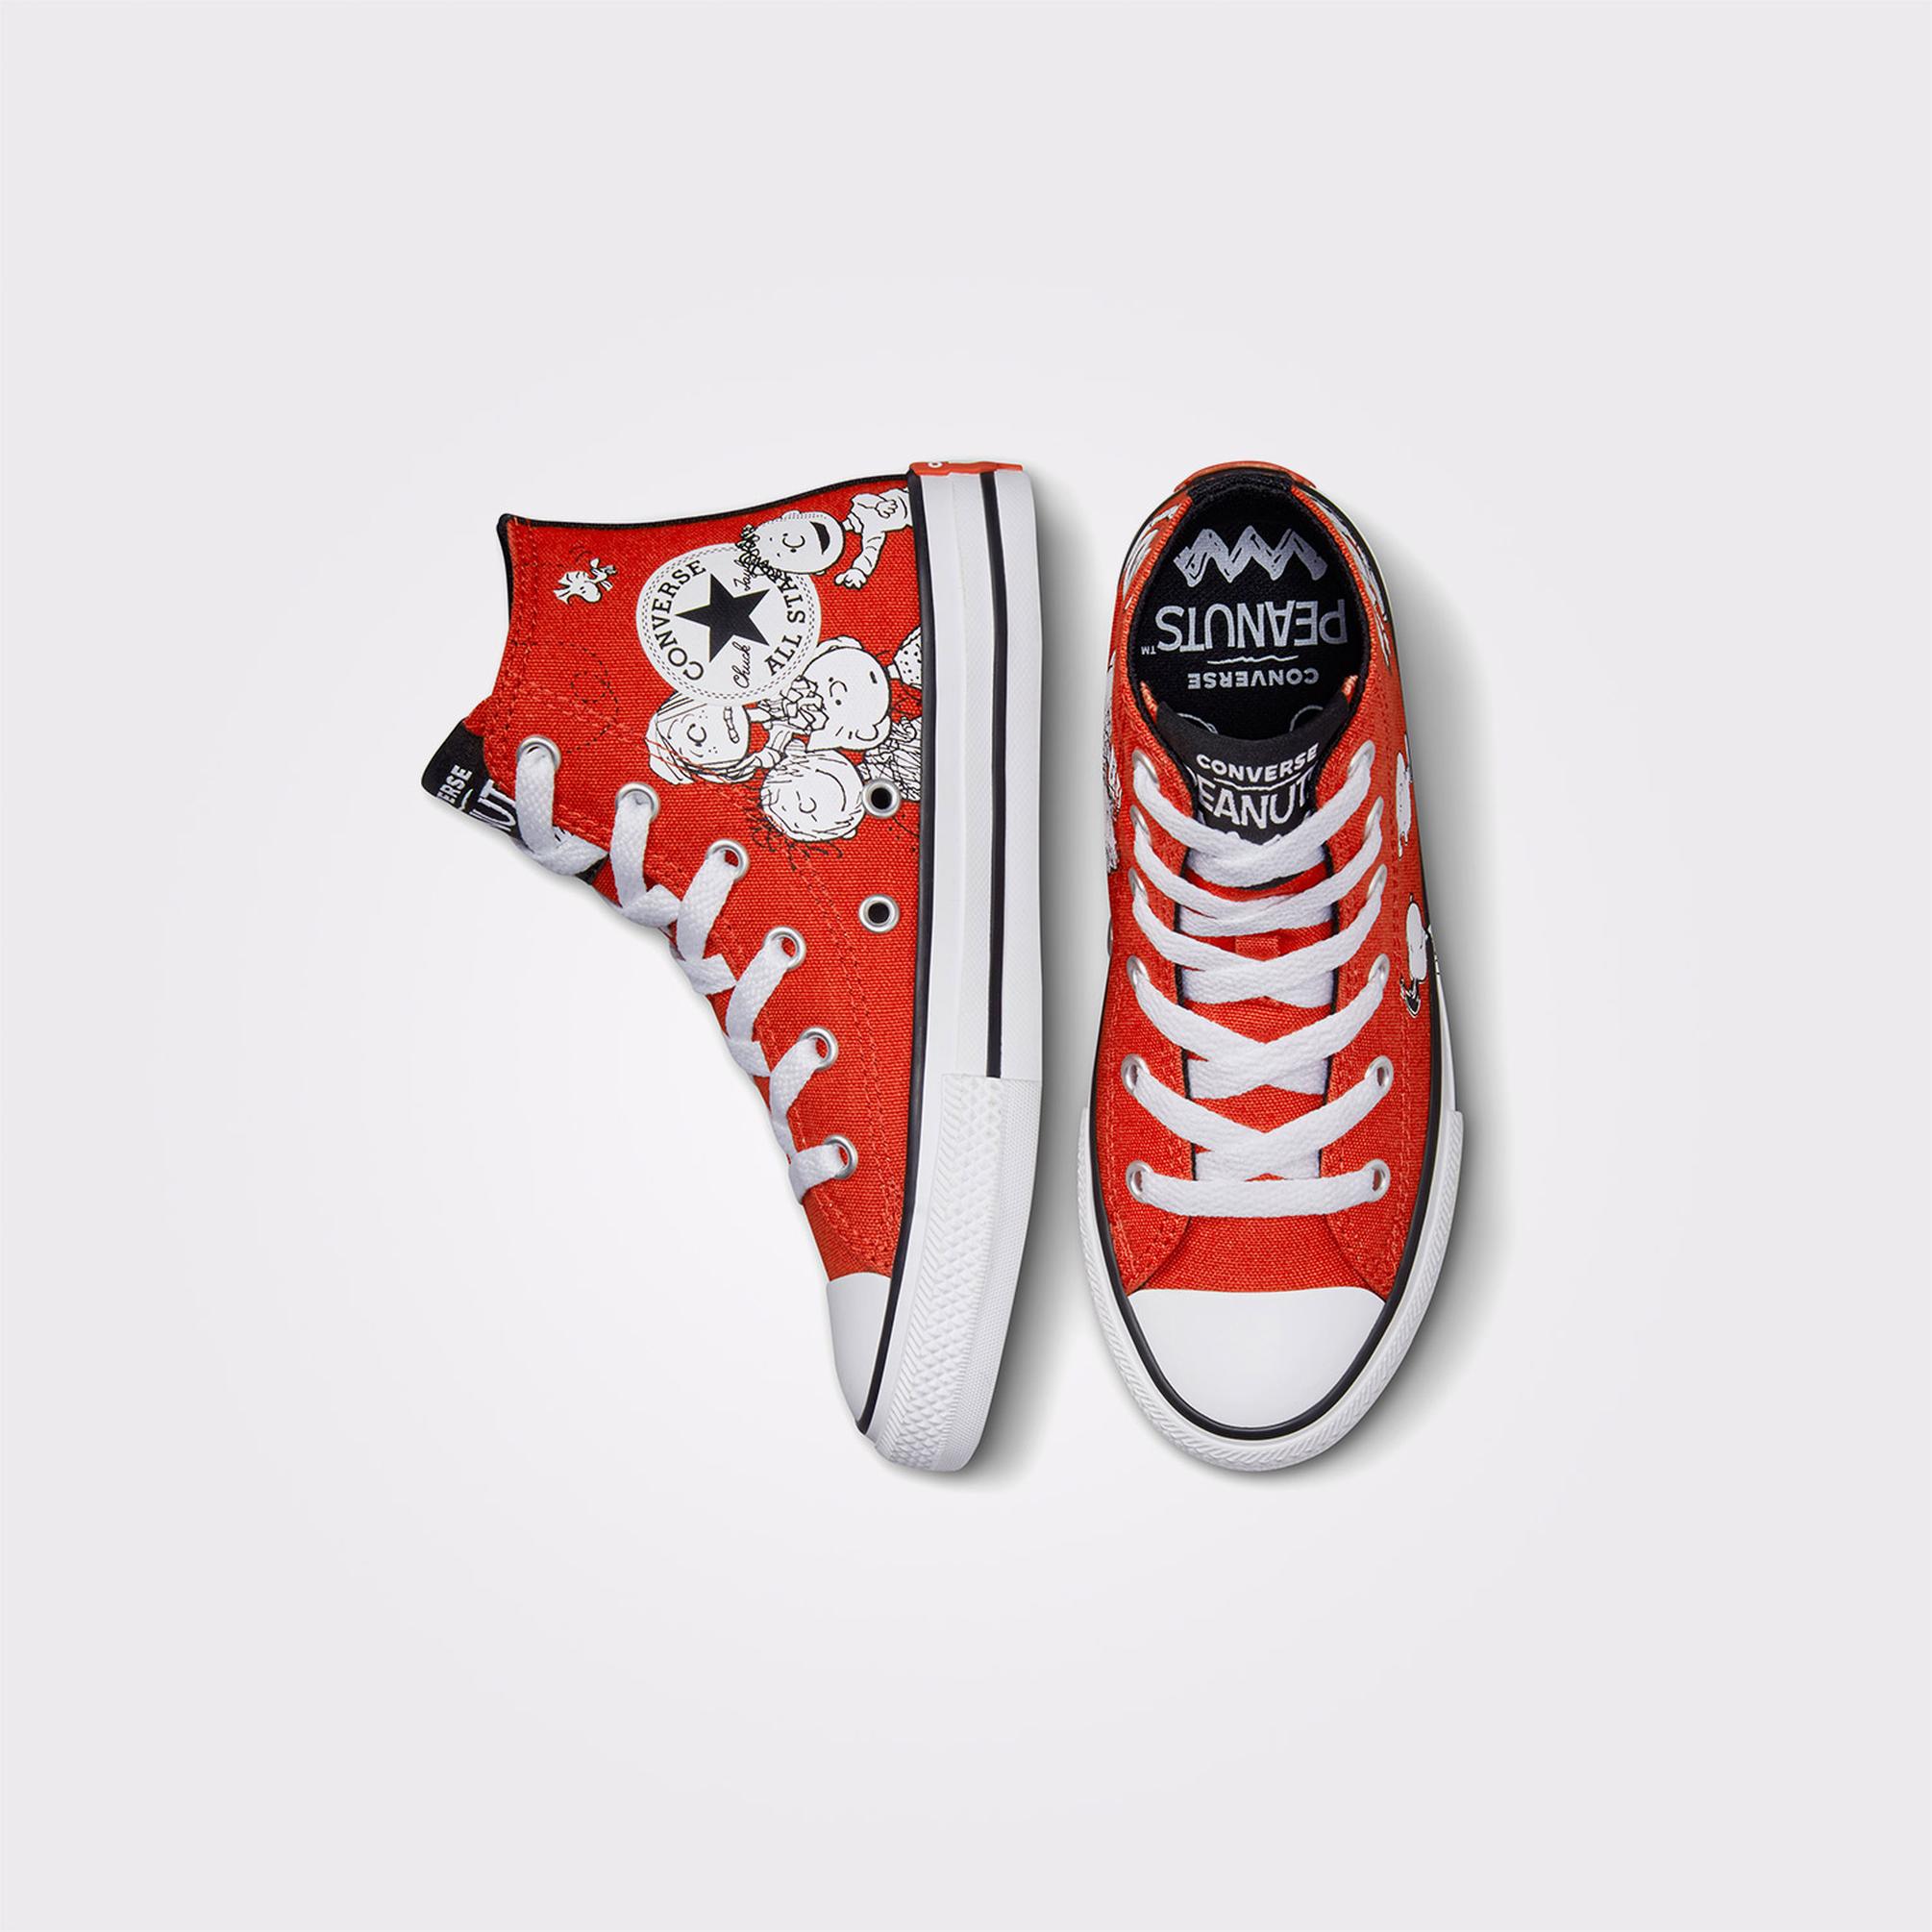  Converse x Peanuts Chuck Taylor All Star Çocuk Kırmızı Sneaker